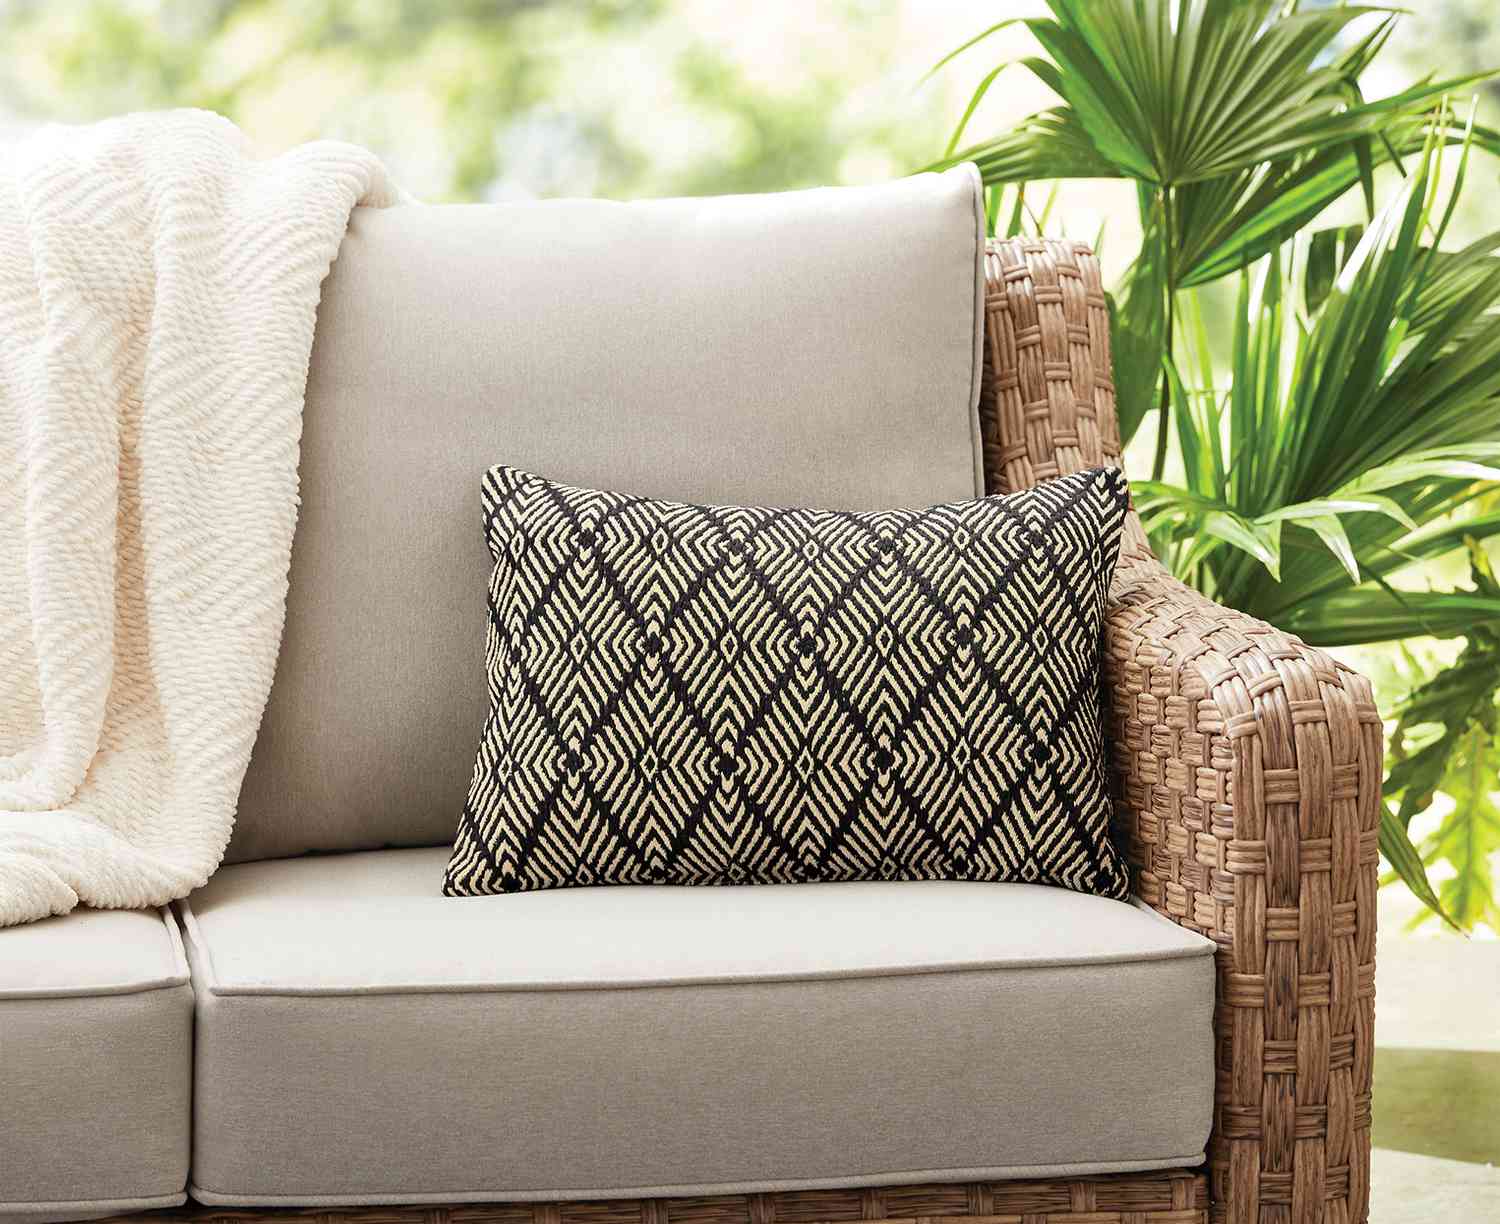 LiLiPi Outdoors Backyard Decorative Accent Throw Pillow